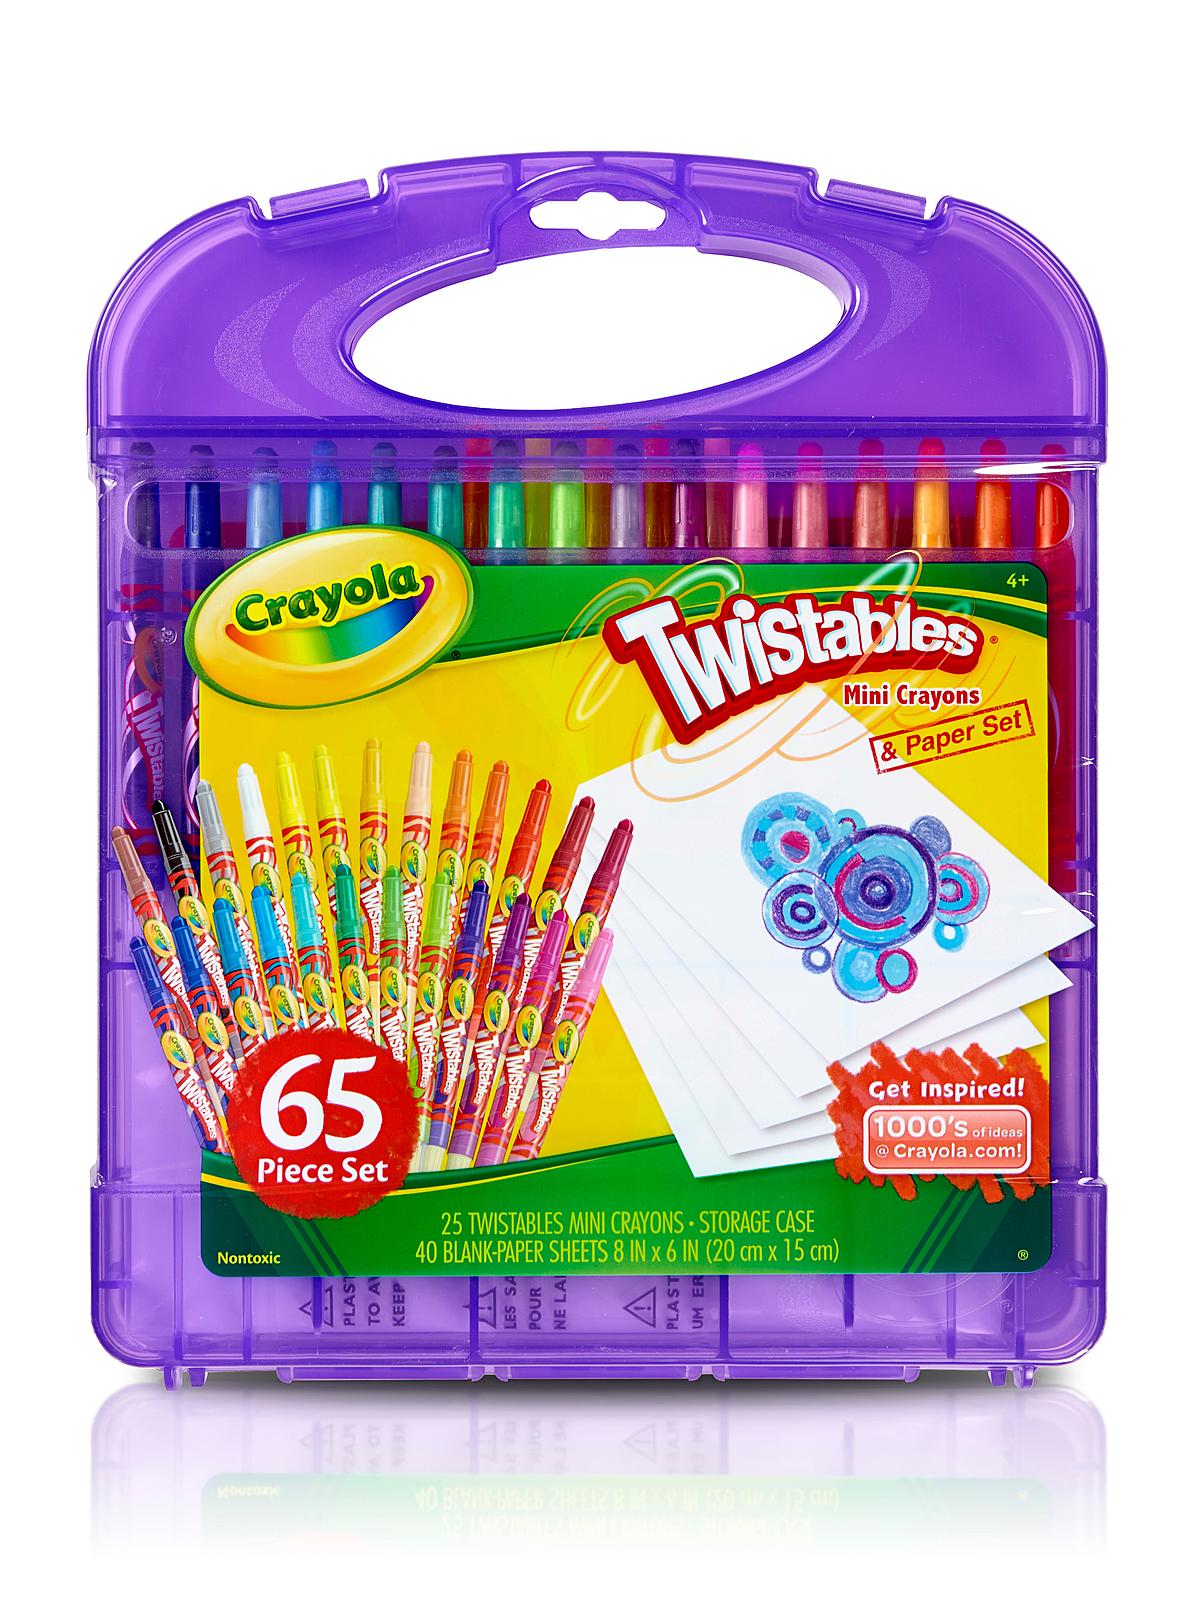 Mini Twistables Crayons & Paper Set Each